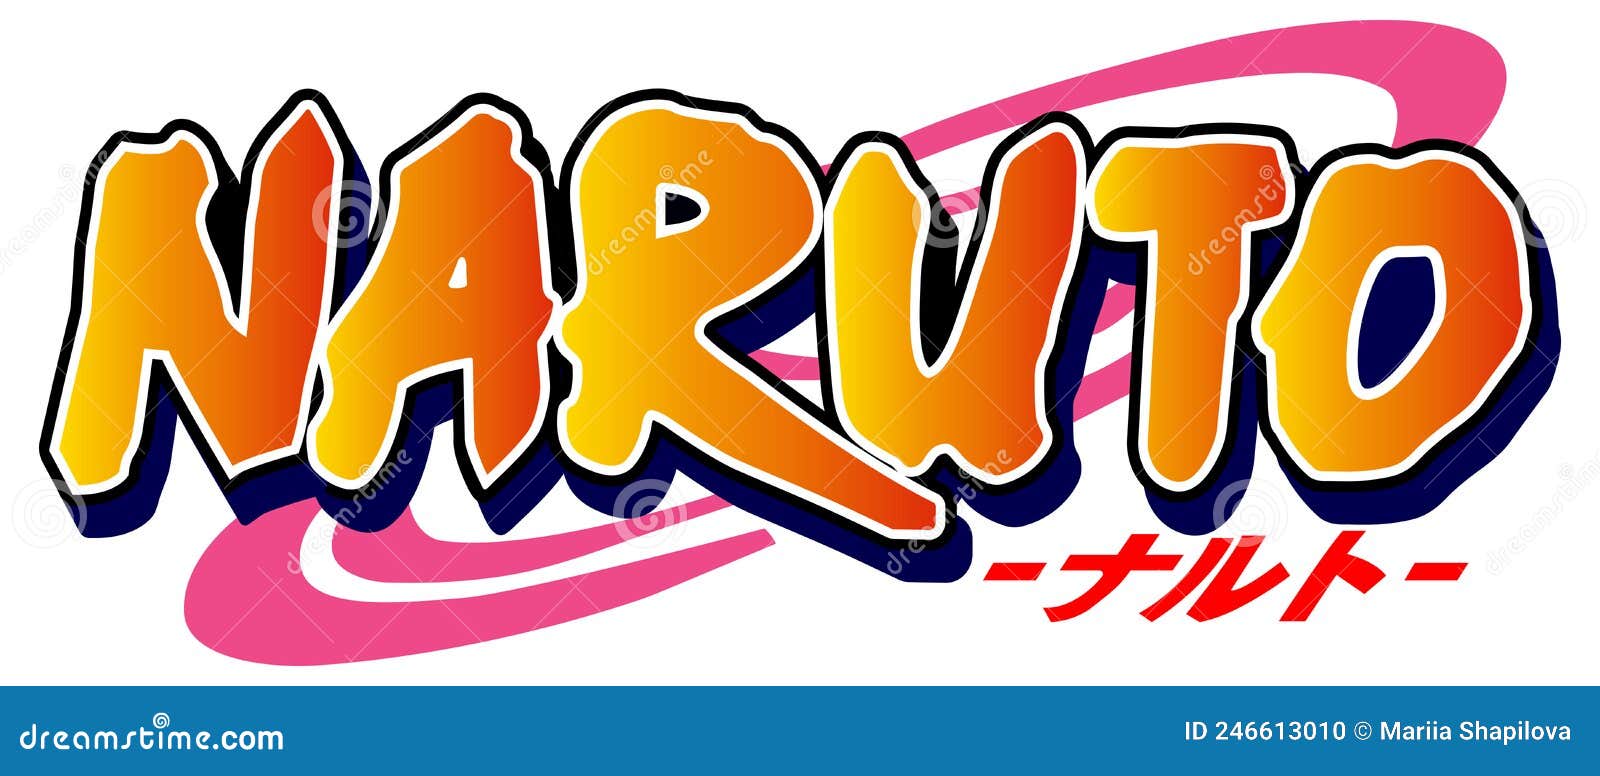 Naruto Sushi - Illustrations ART street